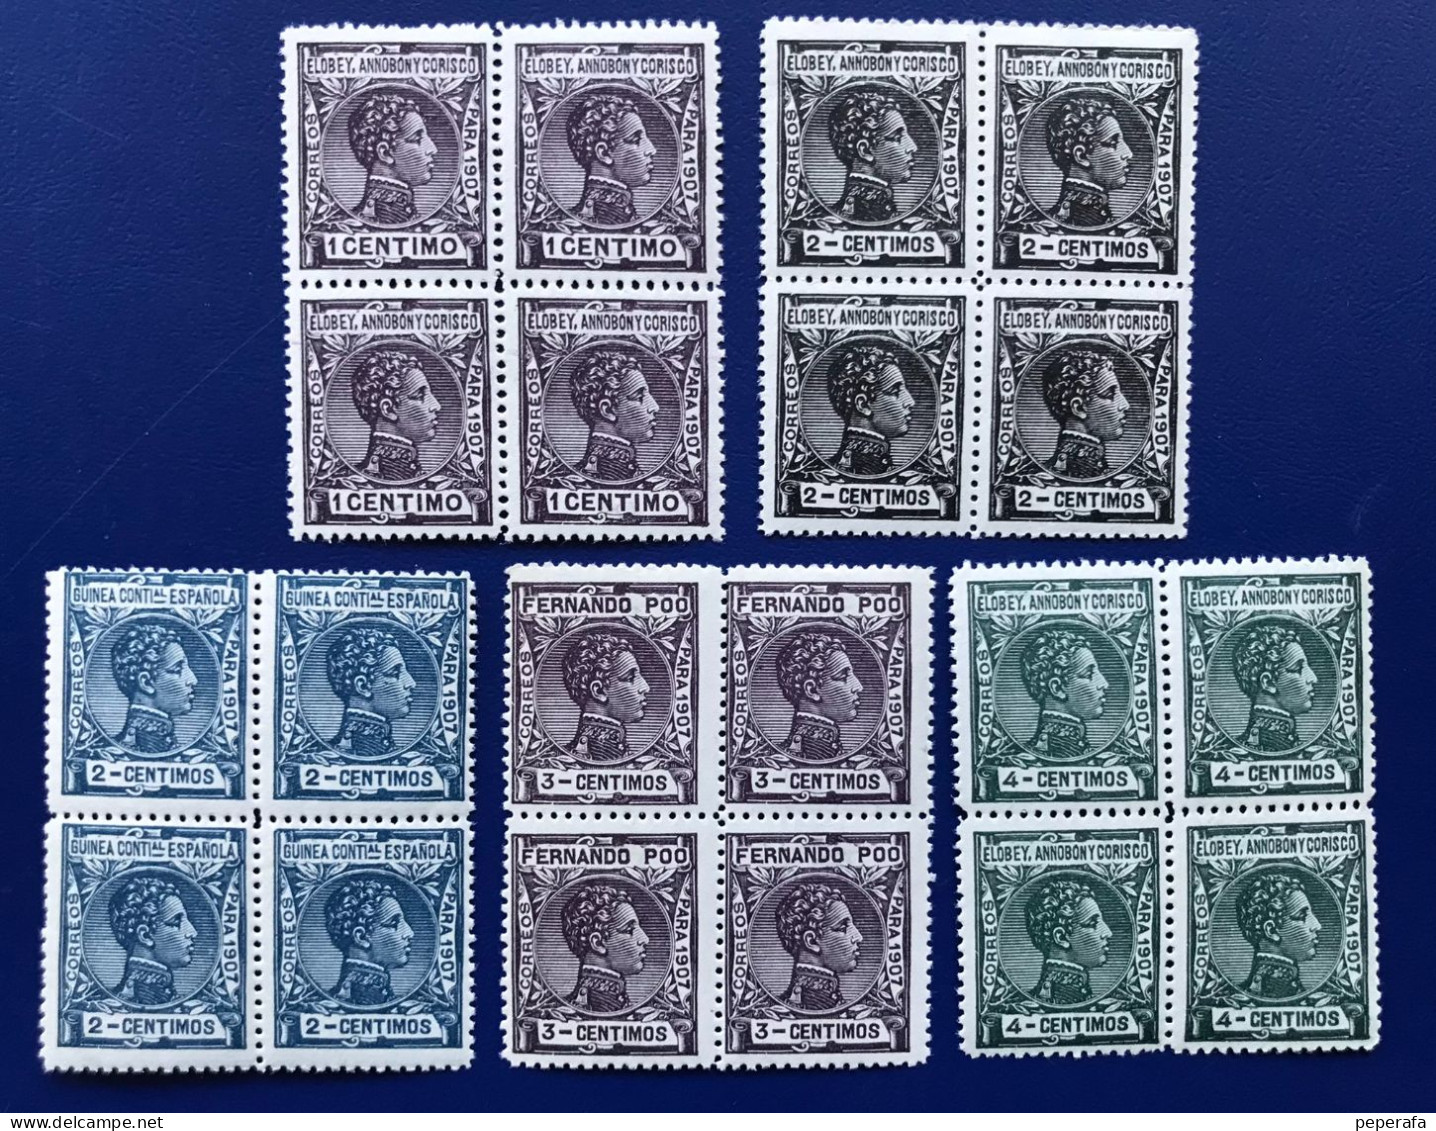 Spain, Spagne, España, GUINEA ESPAÑOLA, GOLFO DE GUINEA 1909, 5 BLOQUE DE 4 SELLOS NUEVOS - Guinea Spagnola